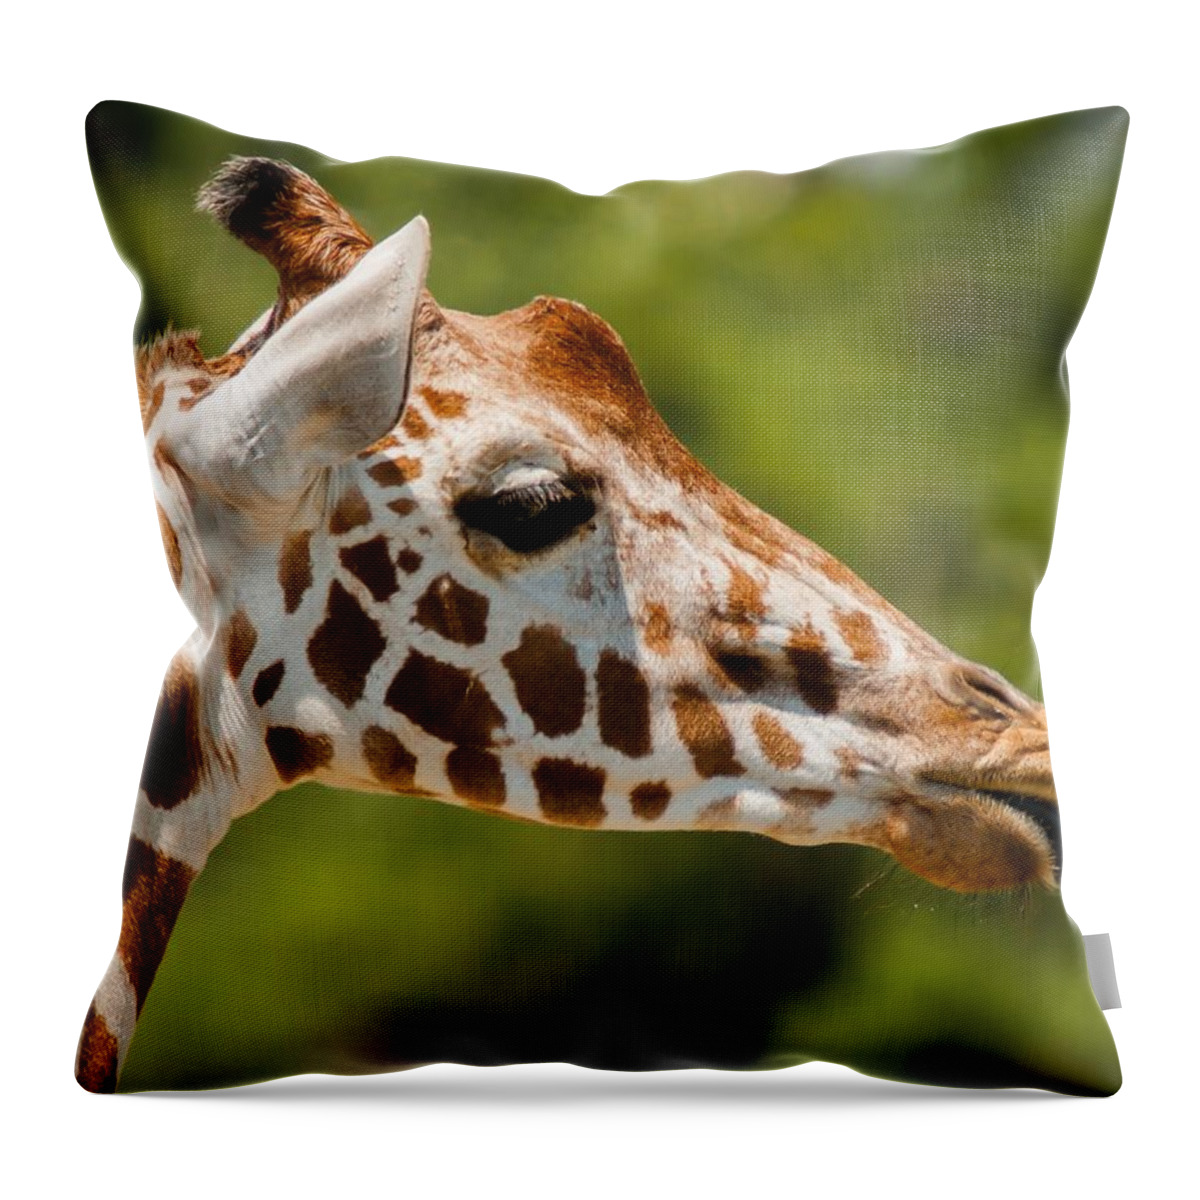 Giraffe Throw Pillow featuring the photograph Nana Nana Boo Boo by Robert L Jackson